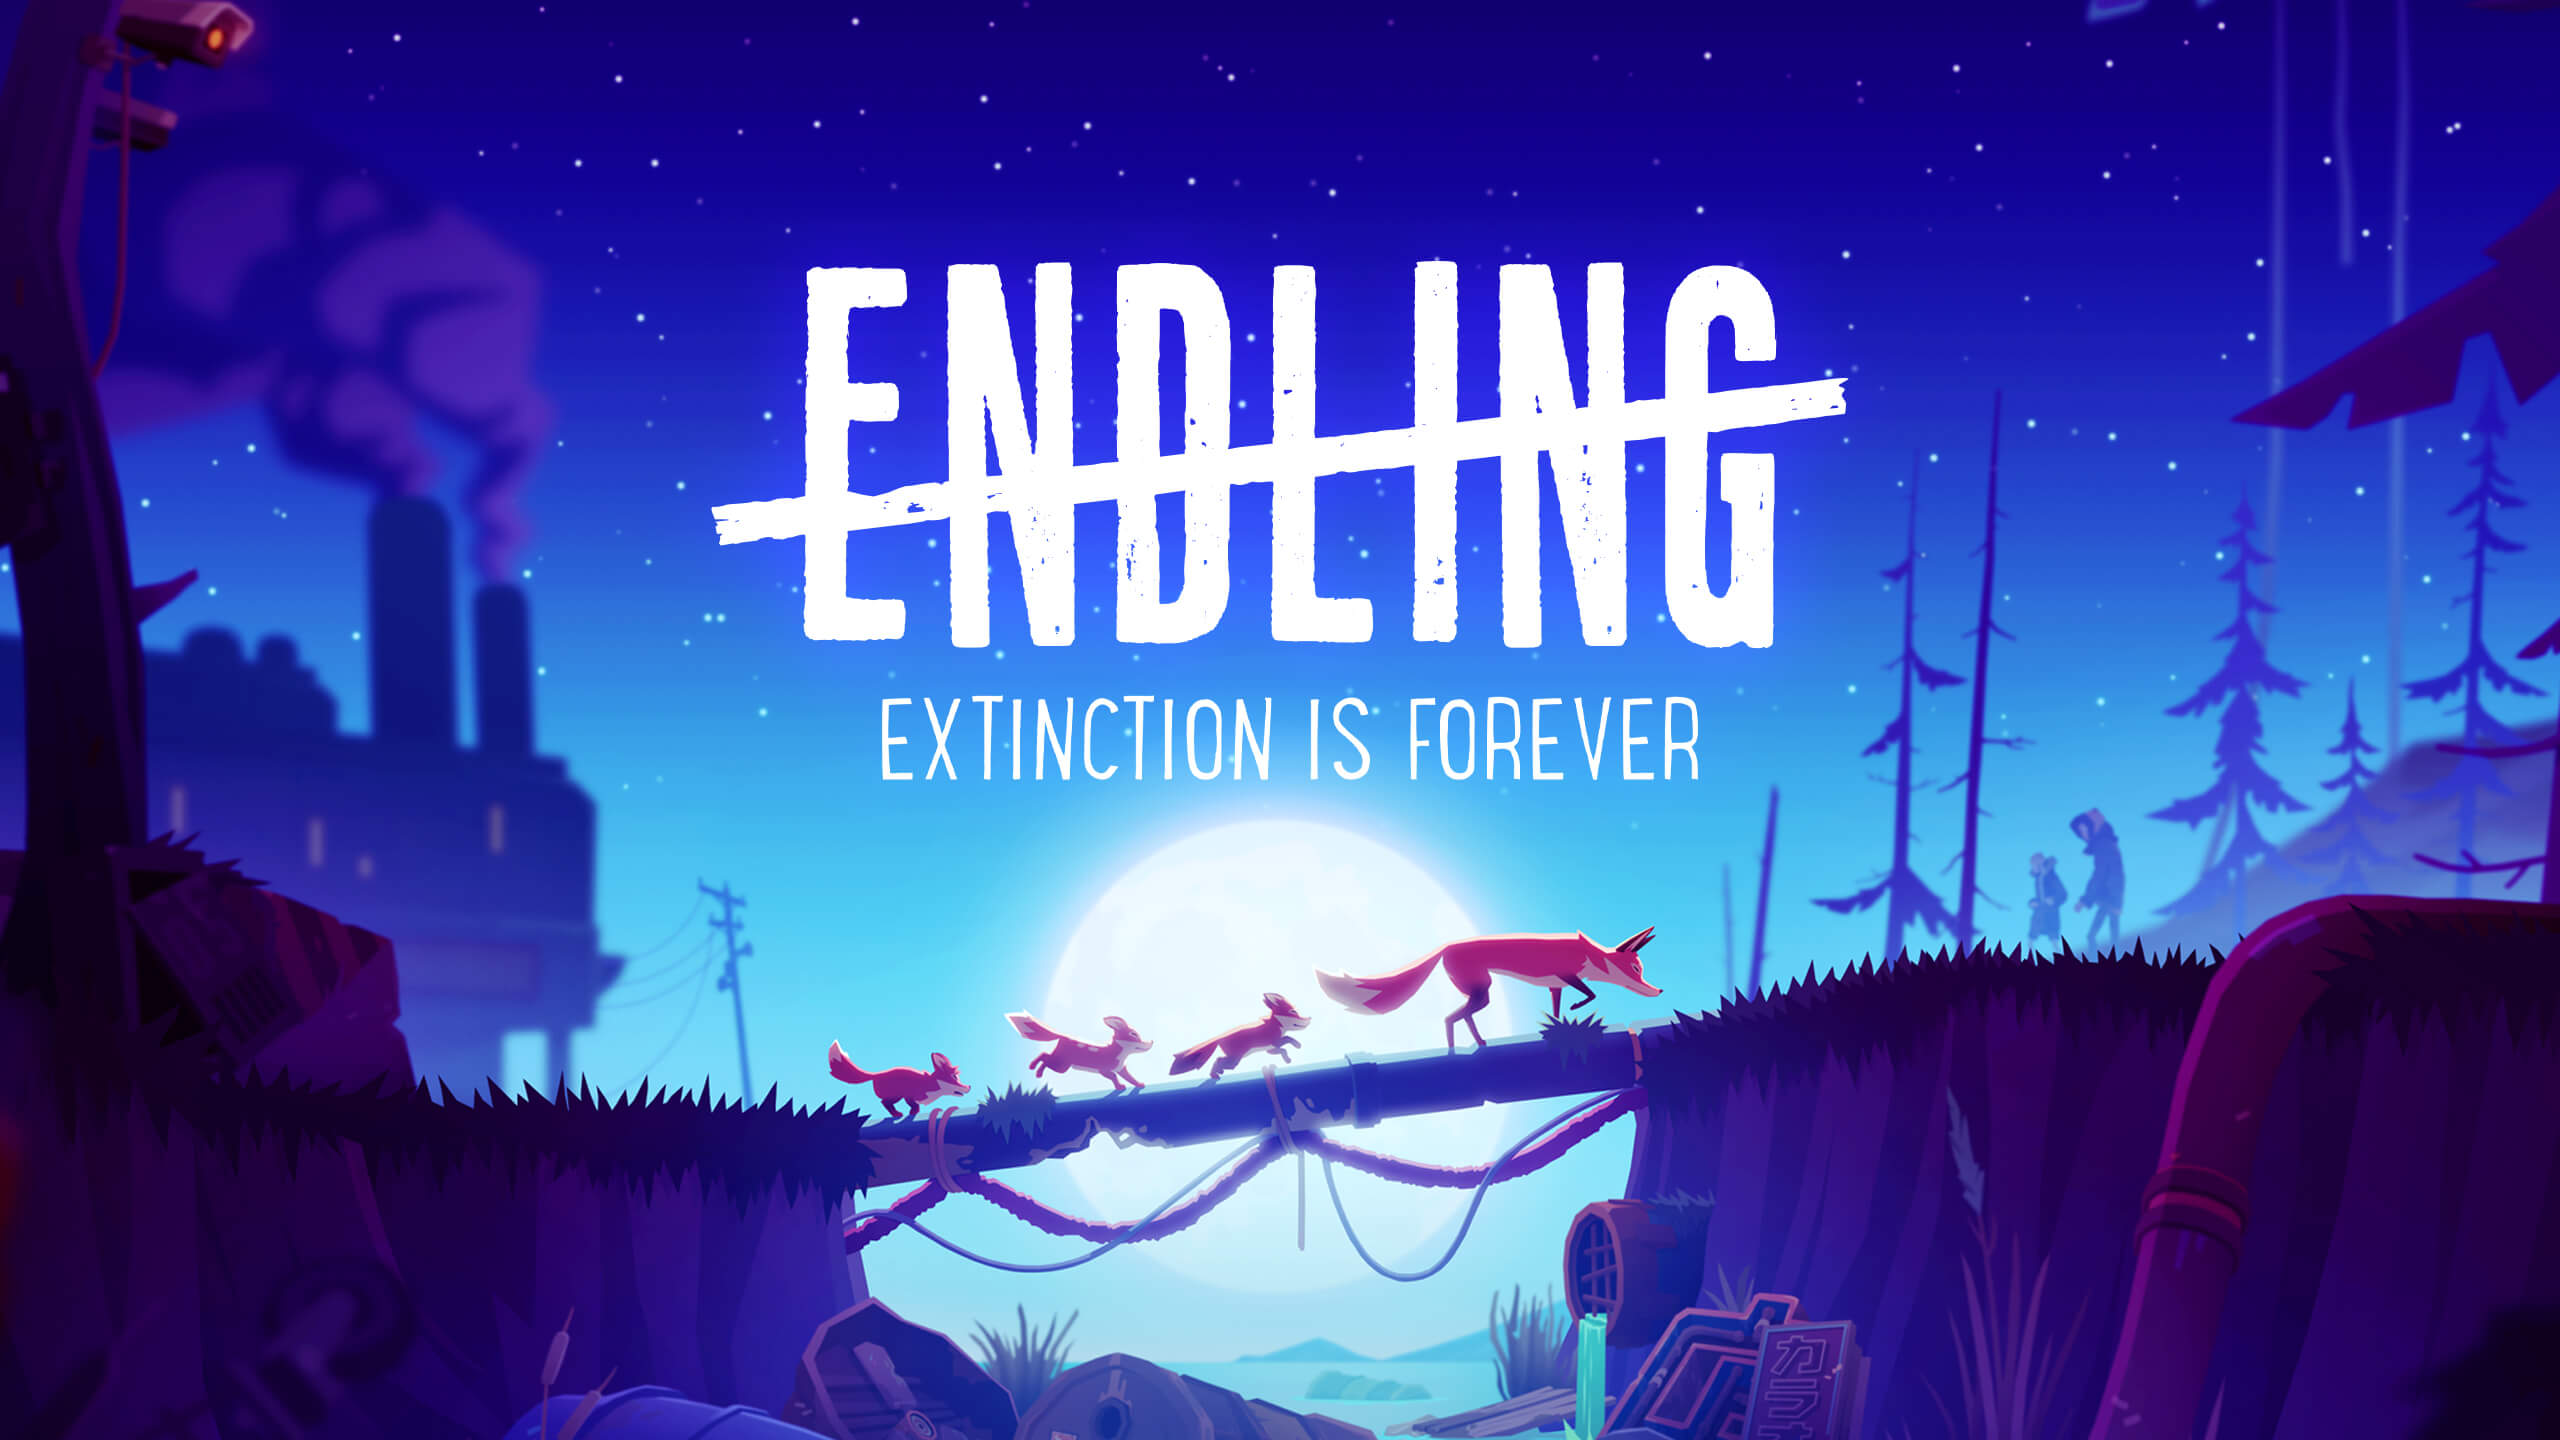 endling * extinction is forever download free